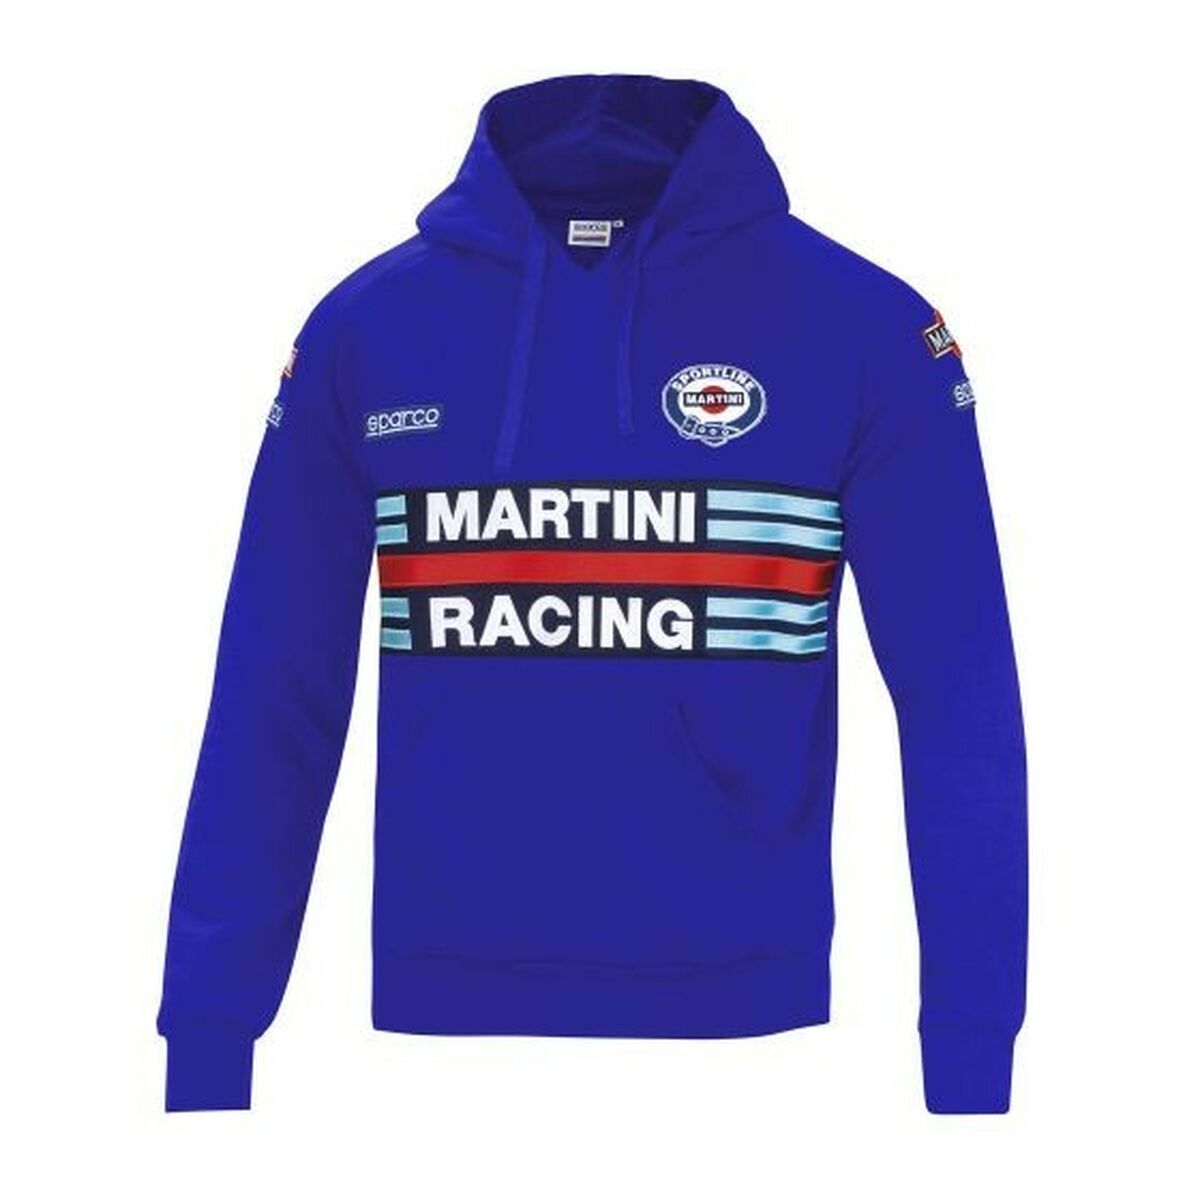 Kaufe Sweater mit Kapuze Sparco Martini Racing Blau bei AWK Flagship um € 106.00